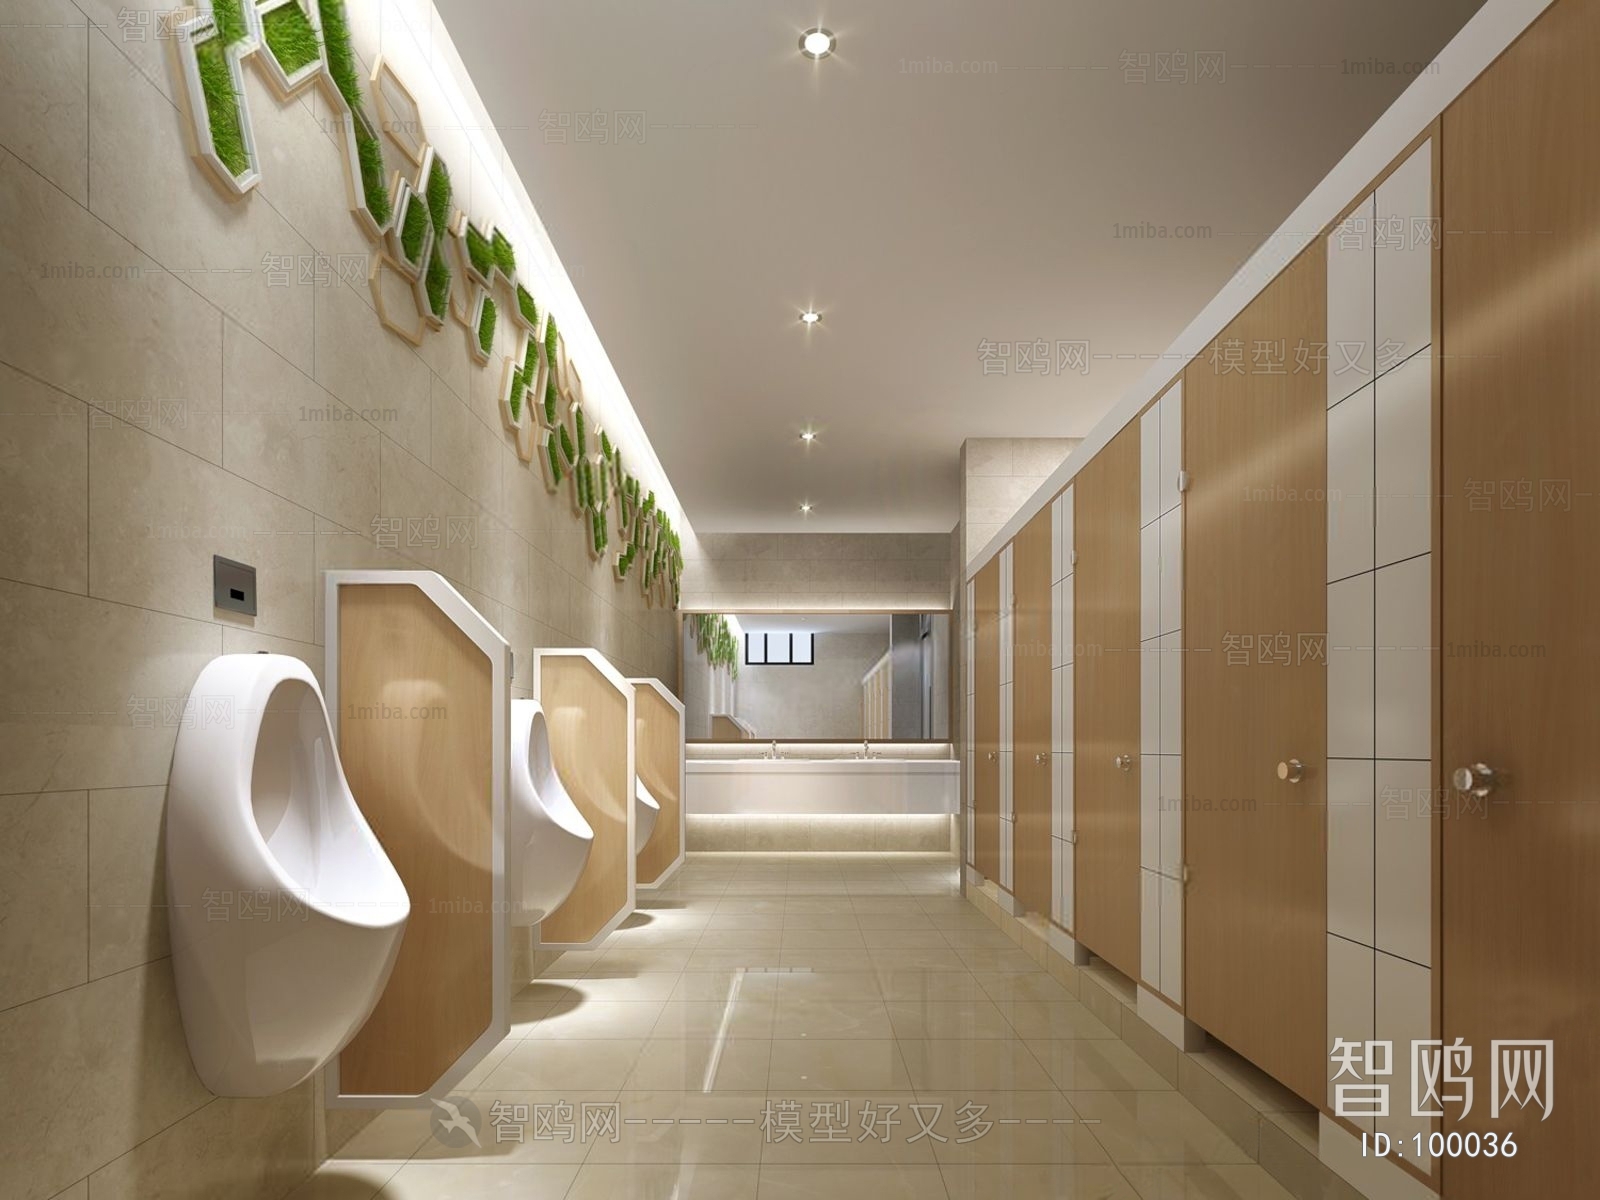 Modern Public Toilet